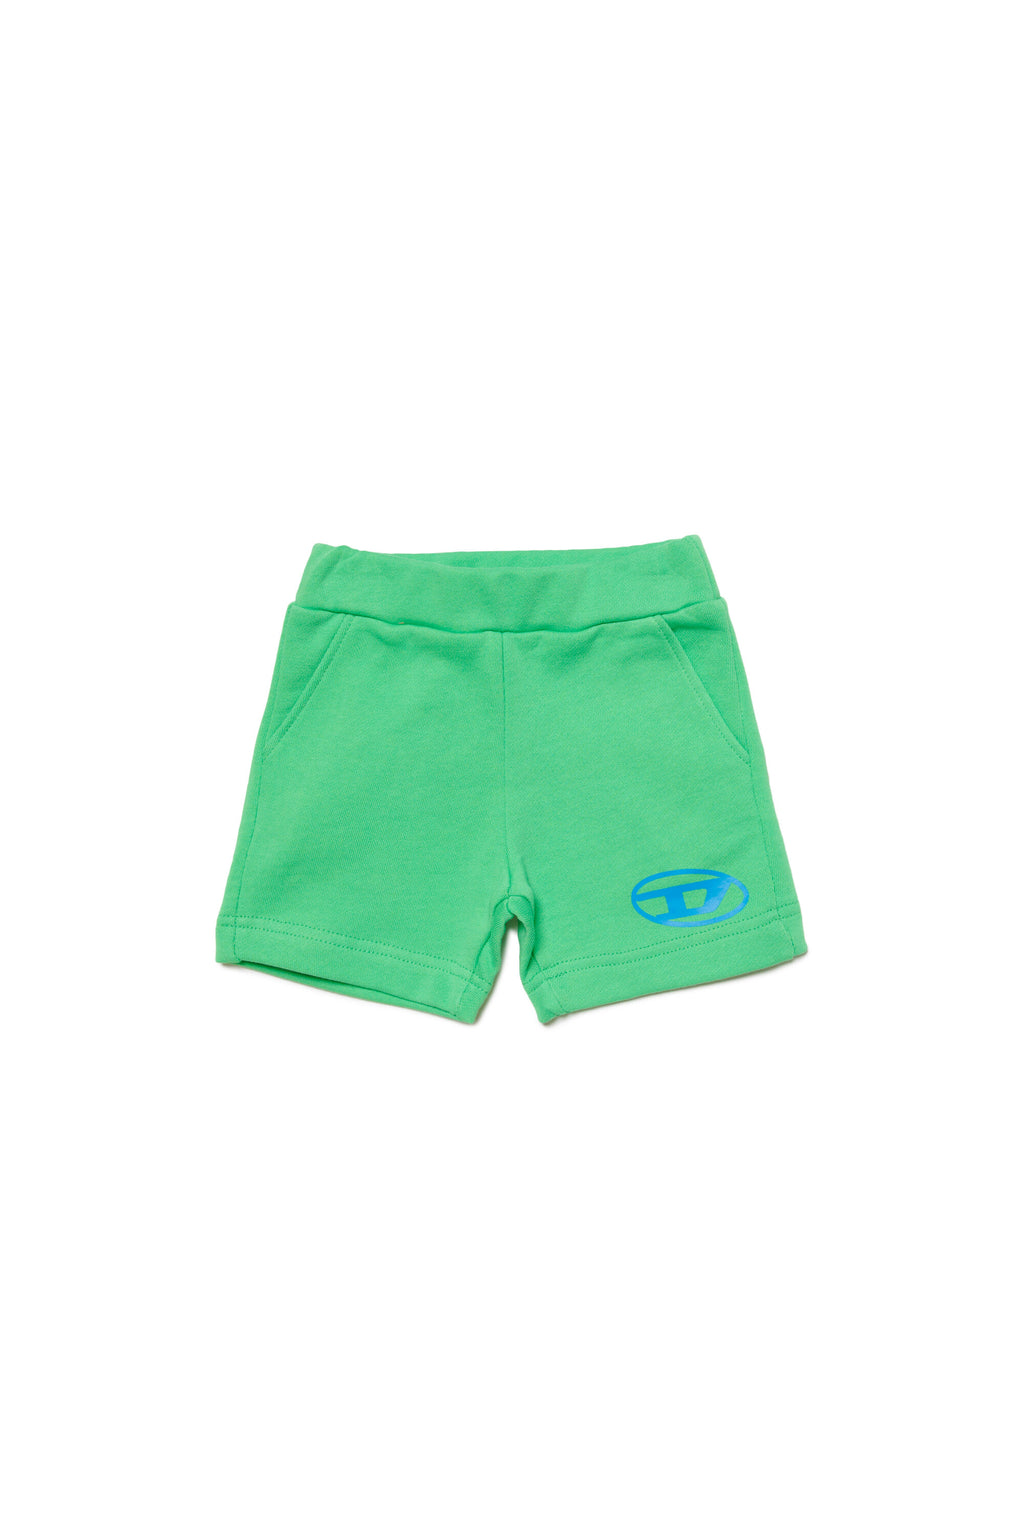 Pantalones cortos en chándal con logotipo Oval D